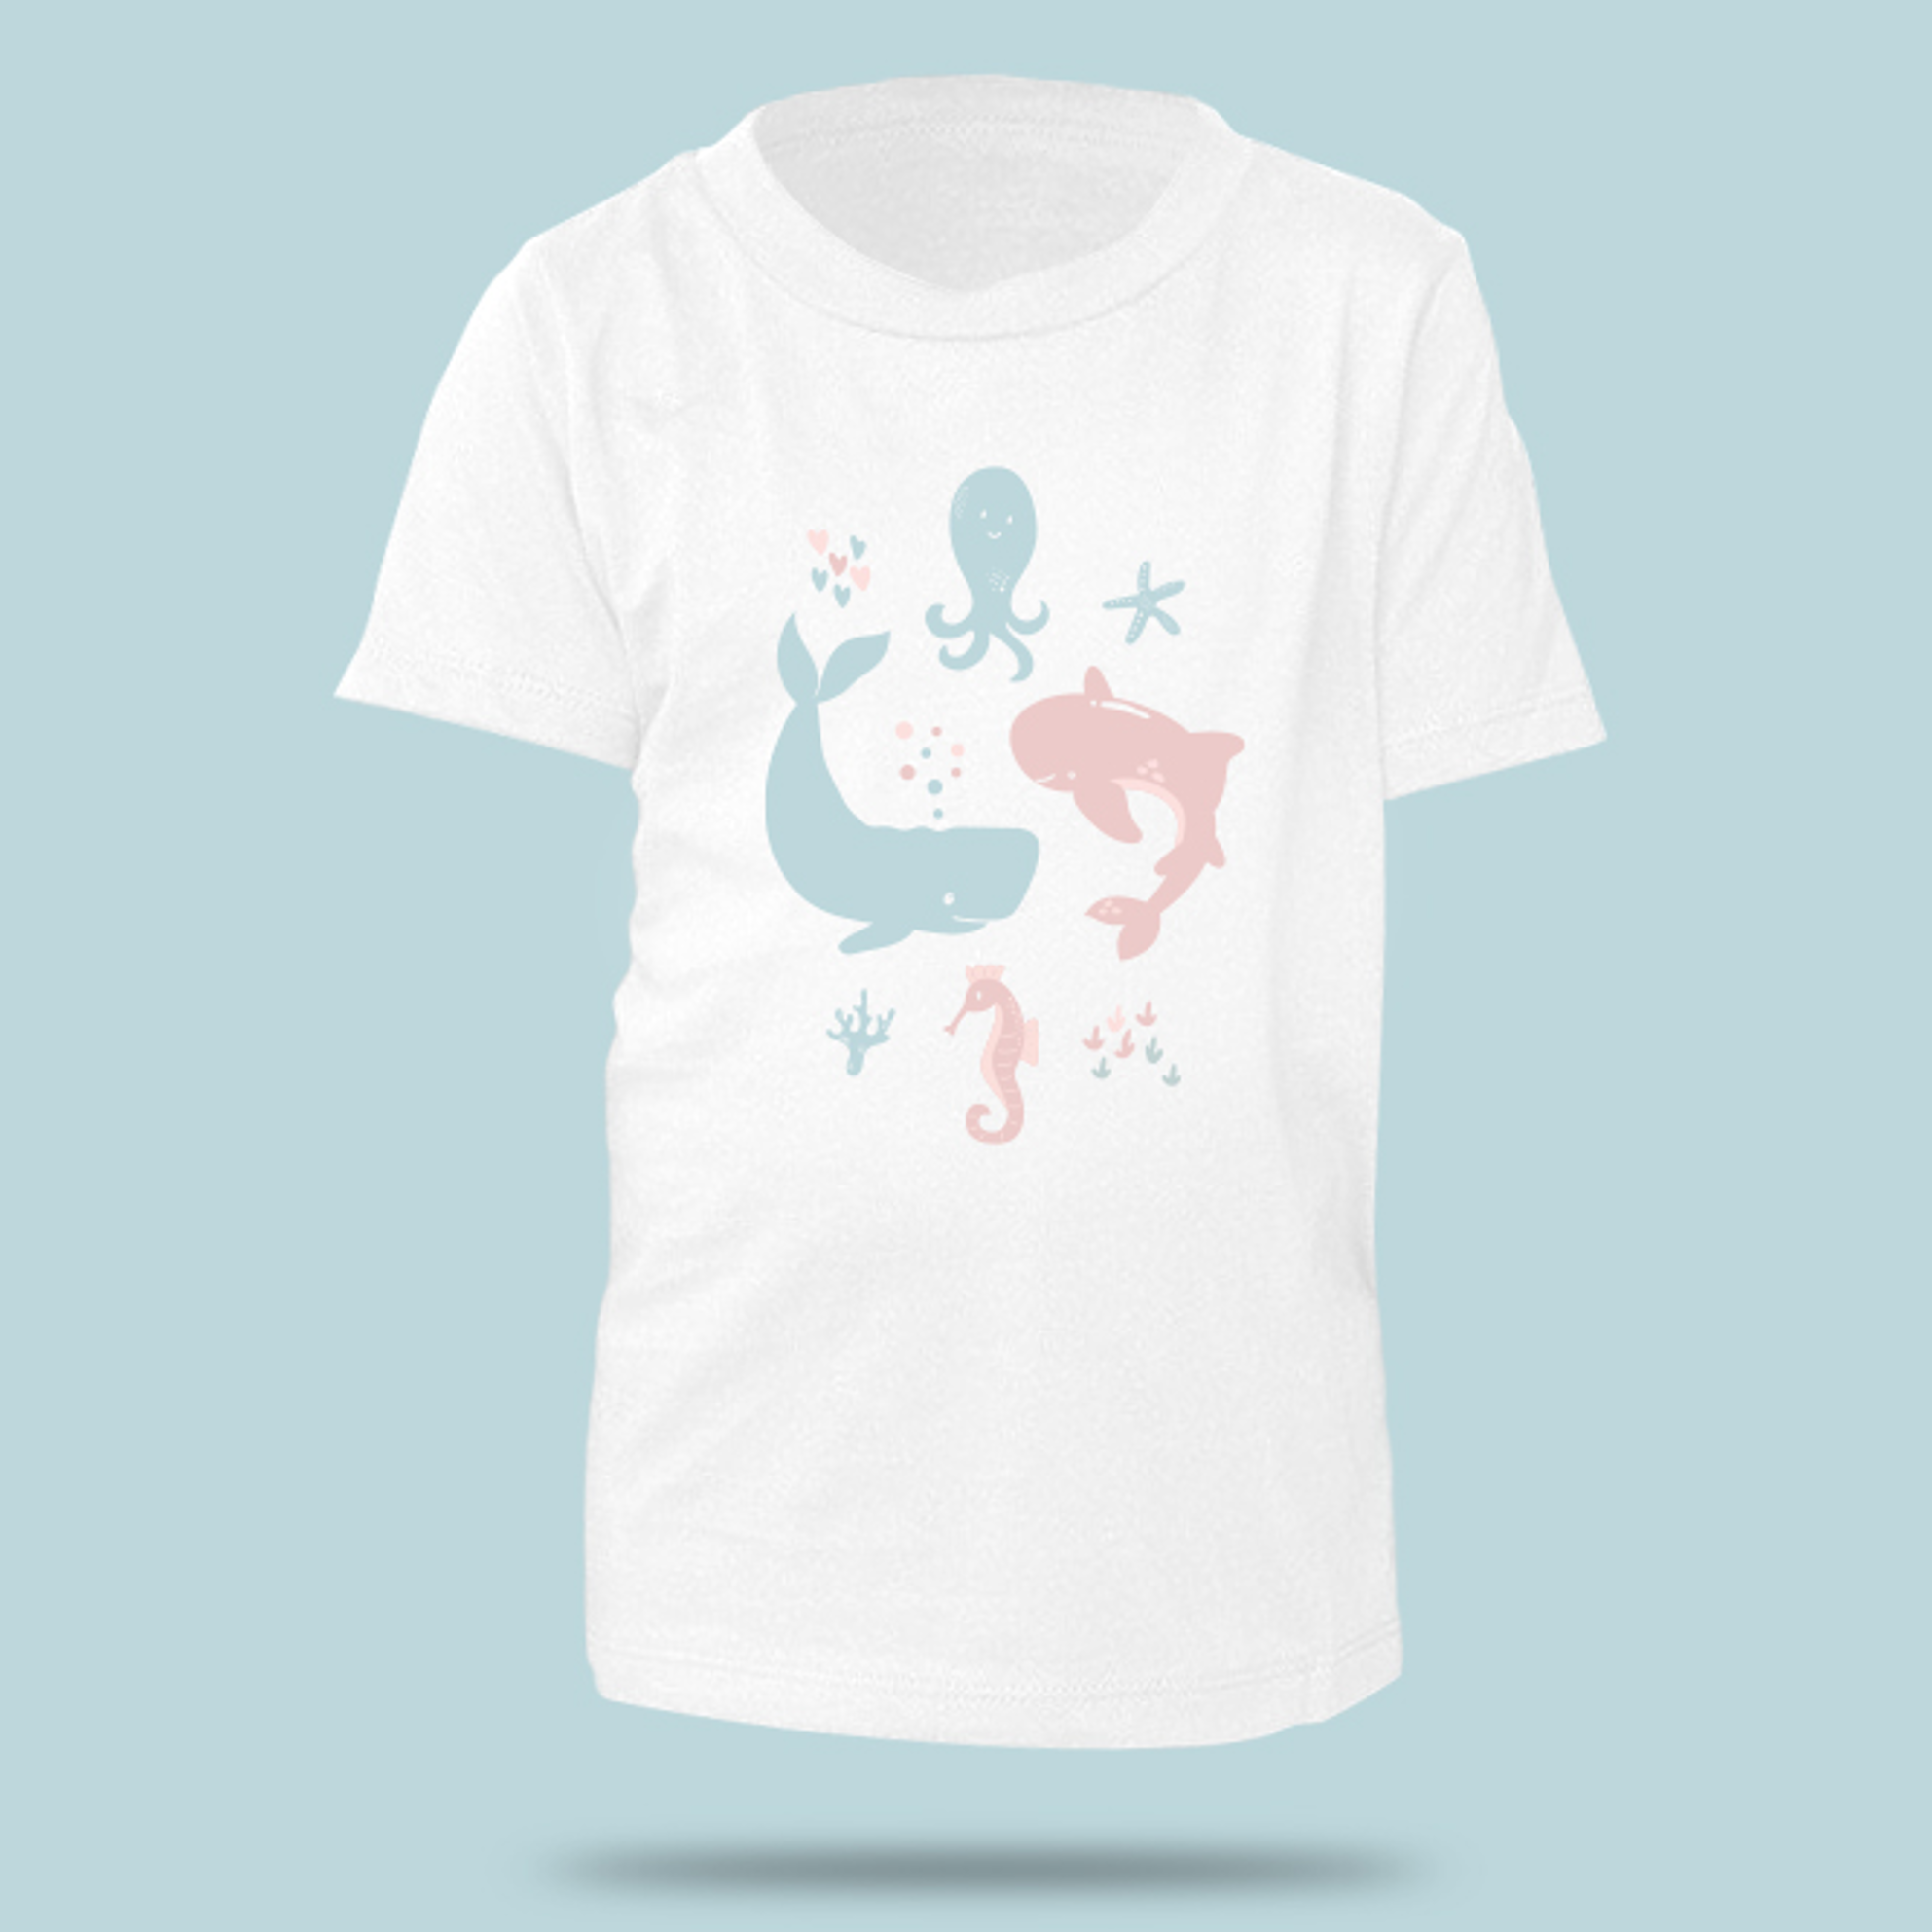 Ocean Creatures Toddler T-Shirt | WWF-Canada Apparel 2